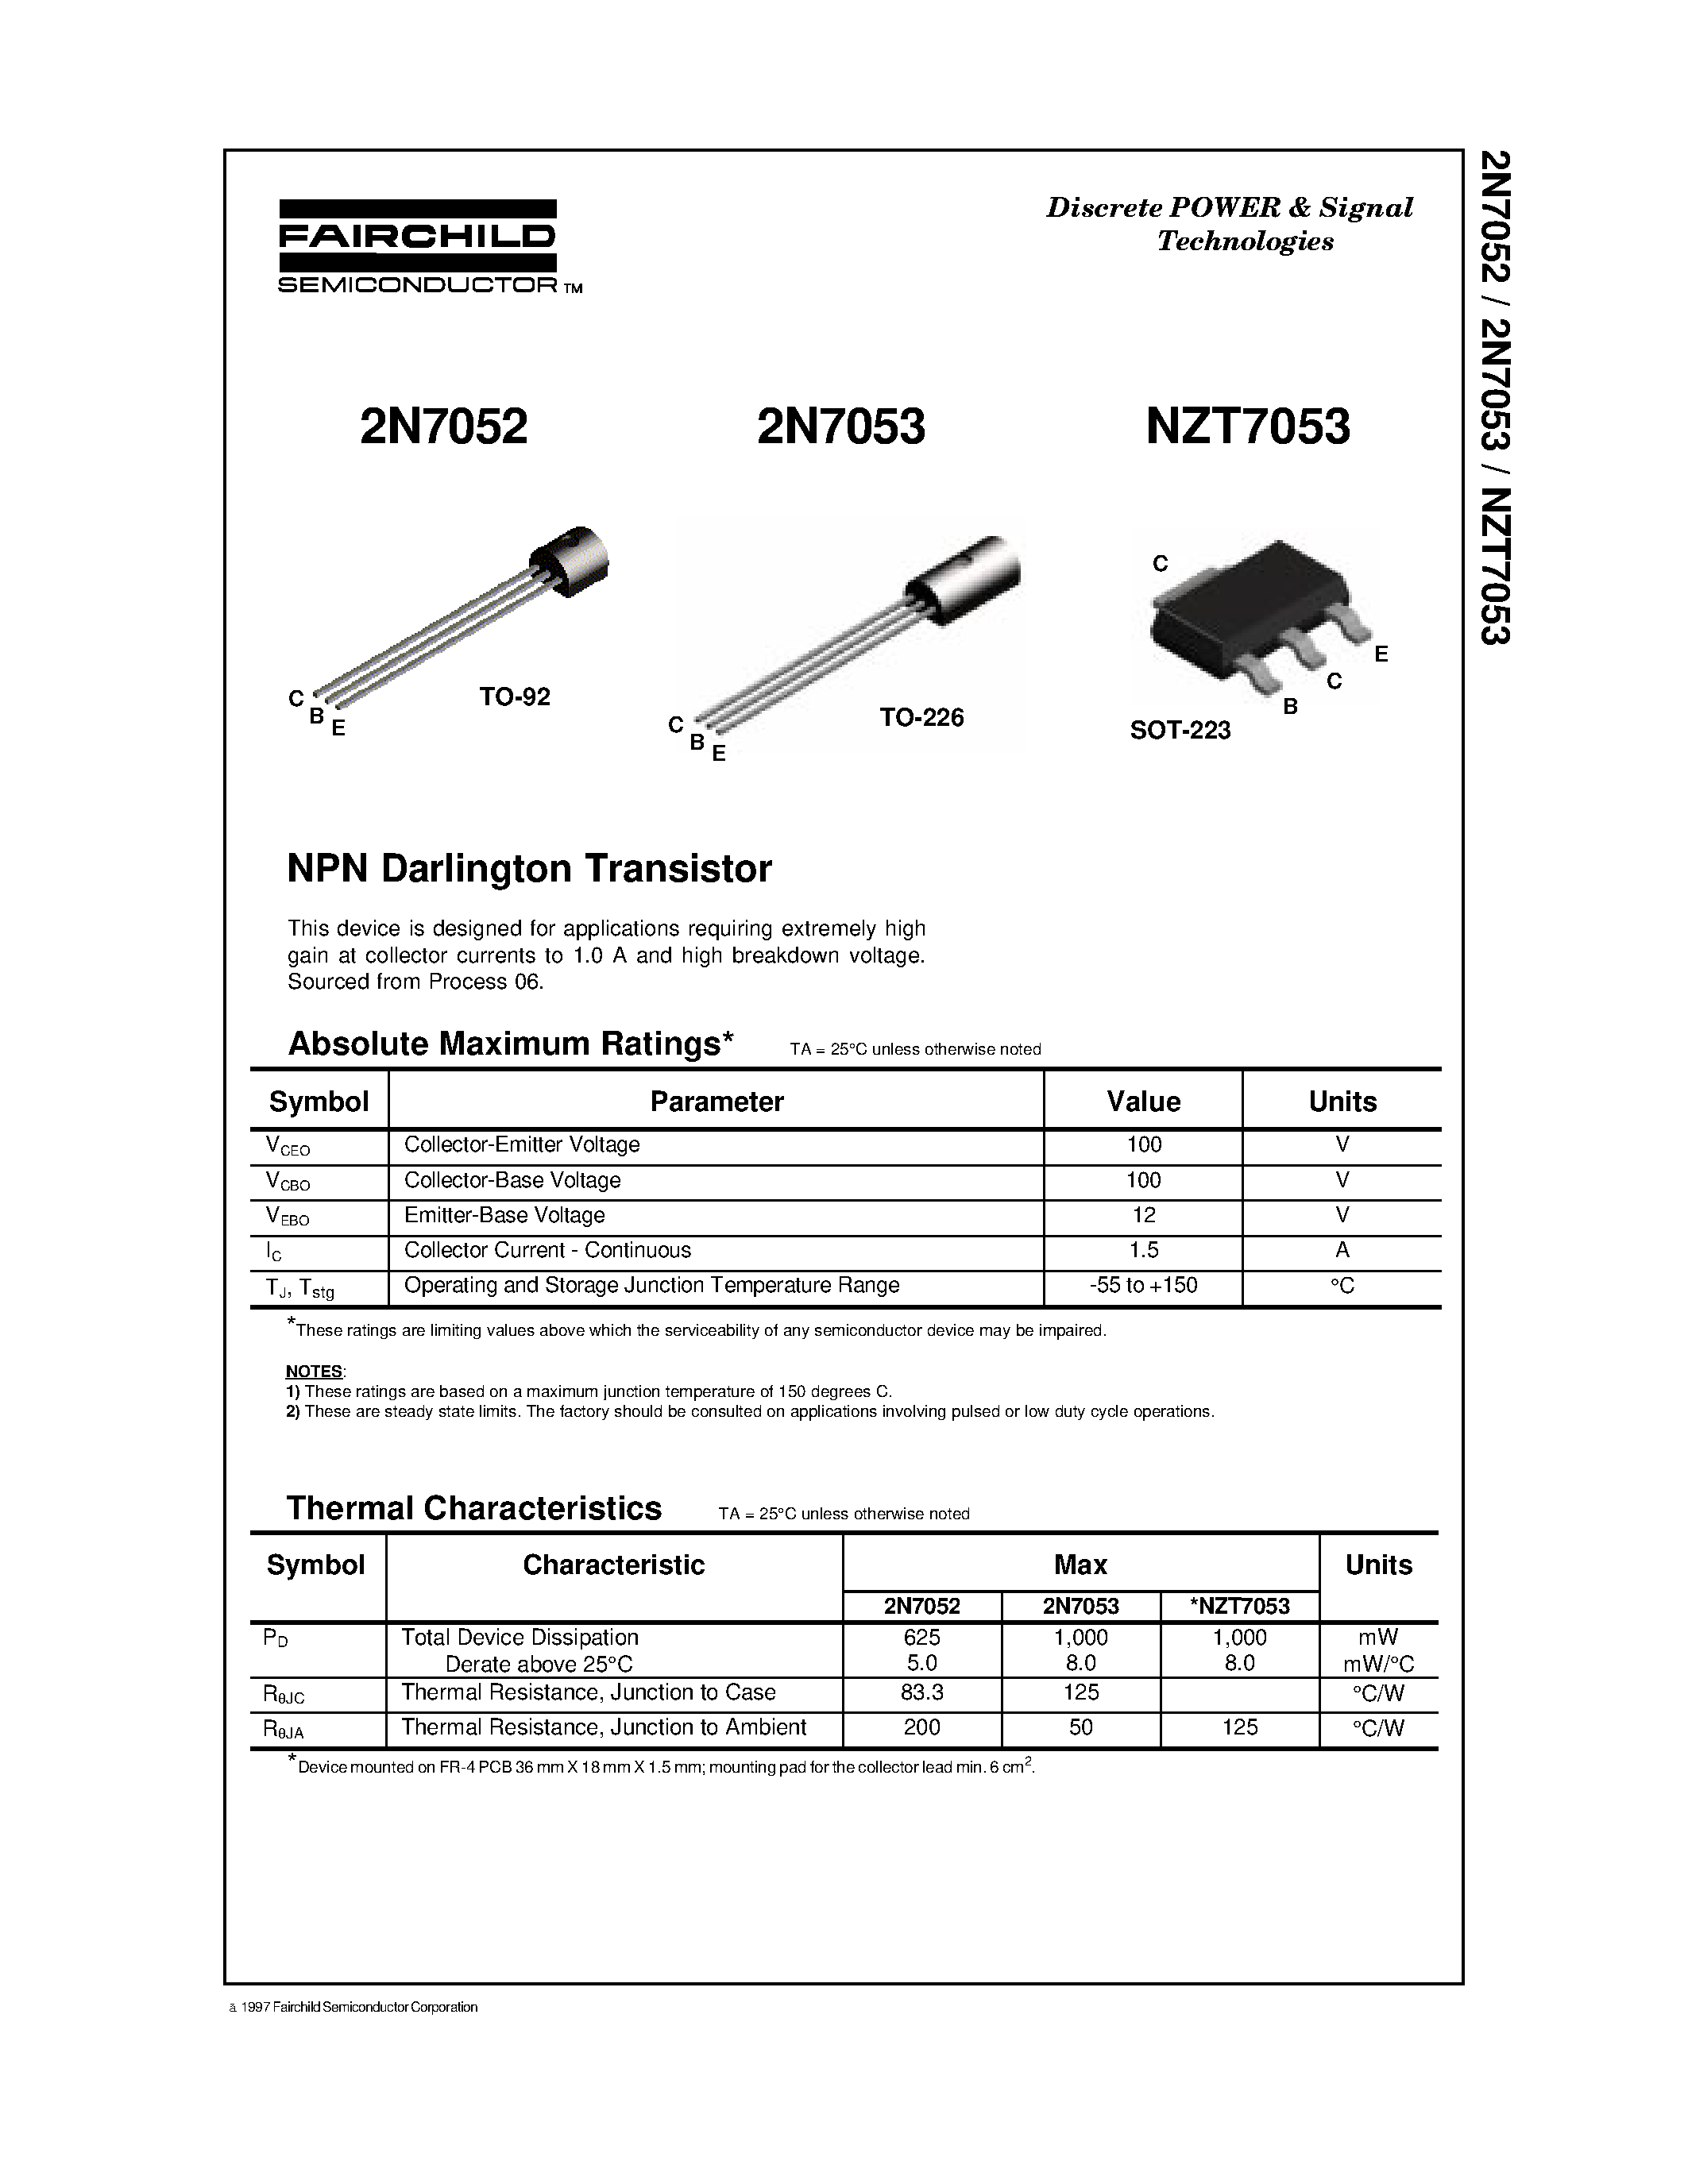 Datasheet NZT7053 - NPN Darlington Transistor page 1